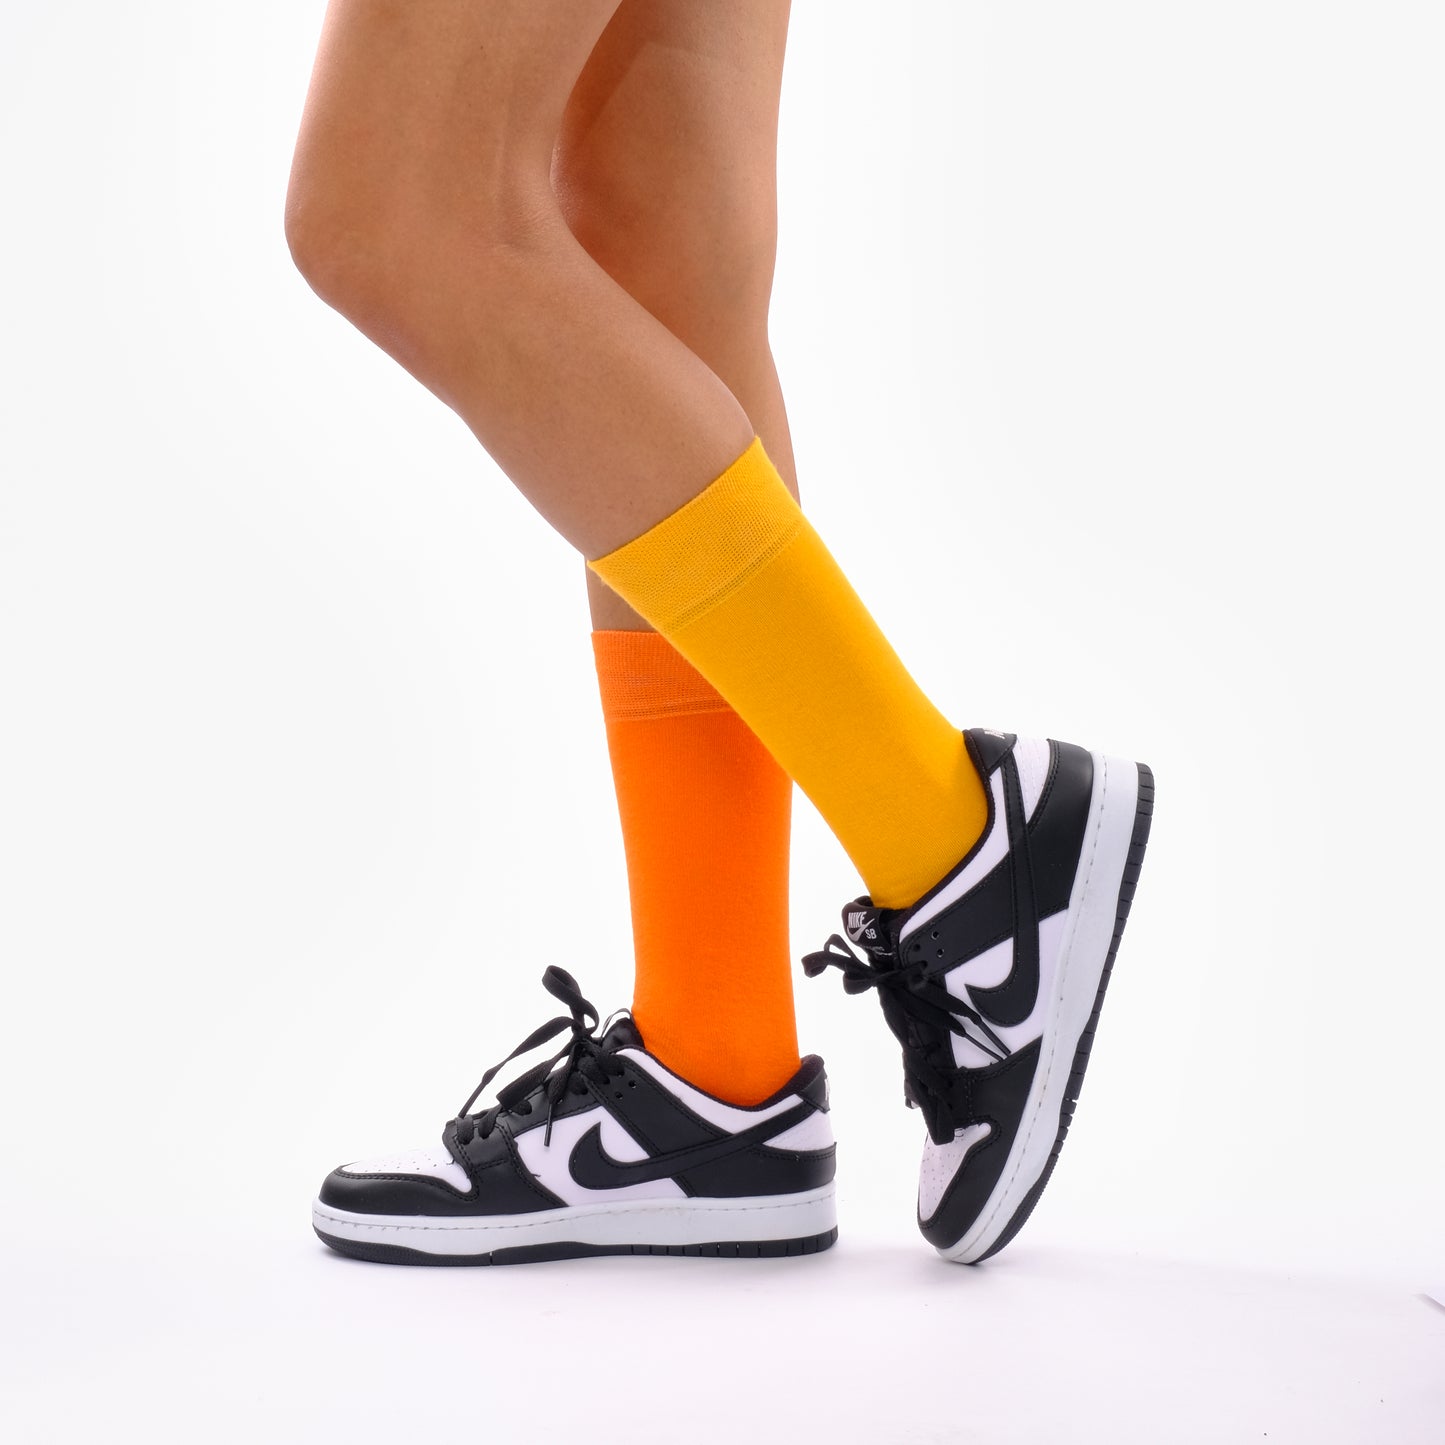 Orange & Mustard Yellow Odd Socks